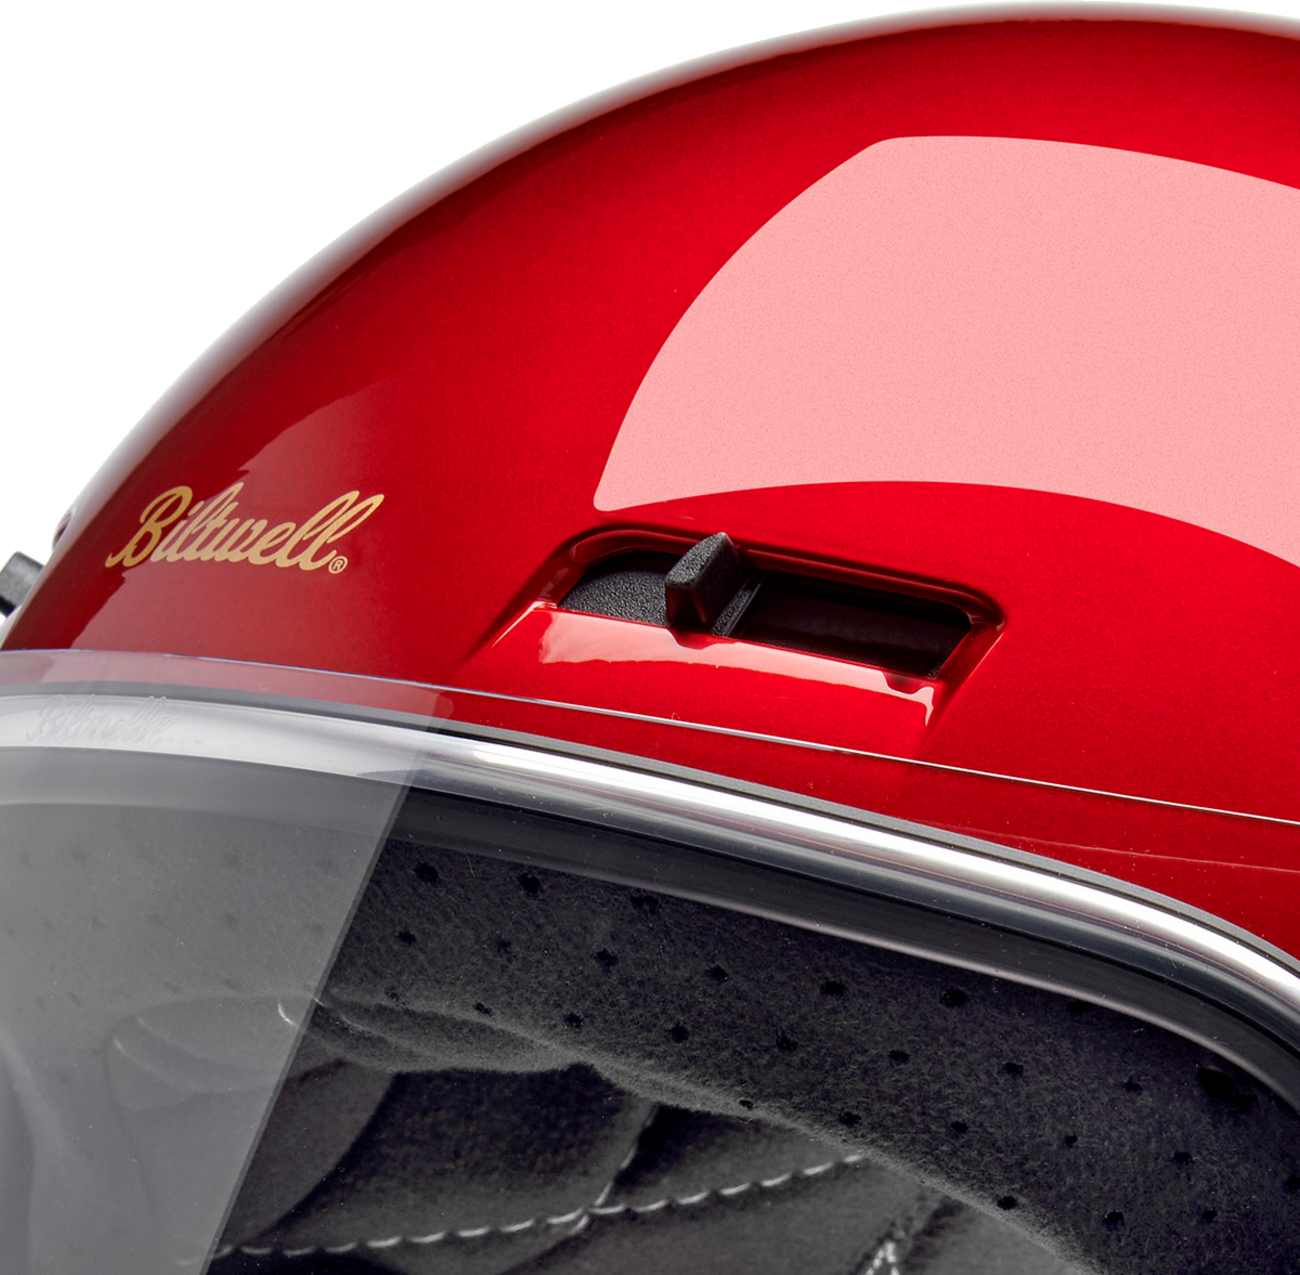 BILTWELL Gringo SV Helmet - Metallic Cherry Red - Small 1006-351-502